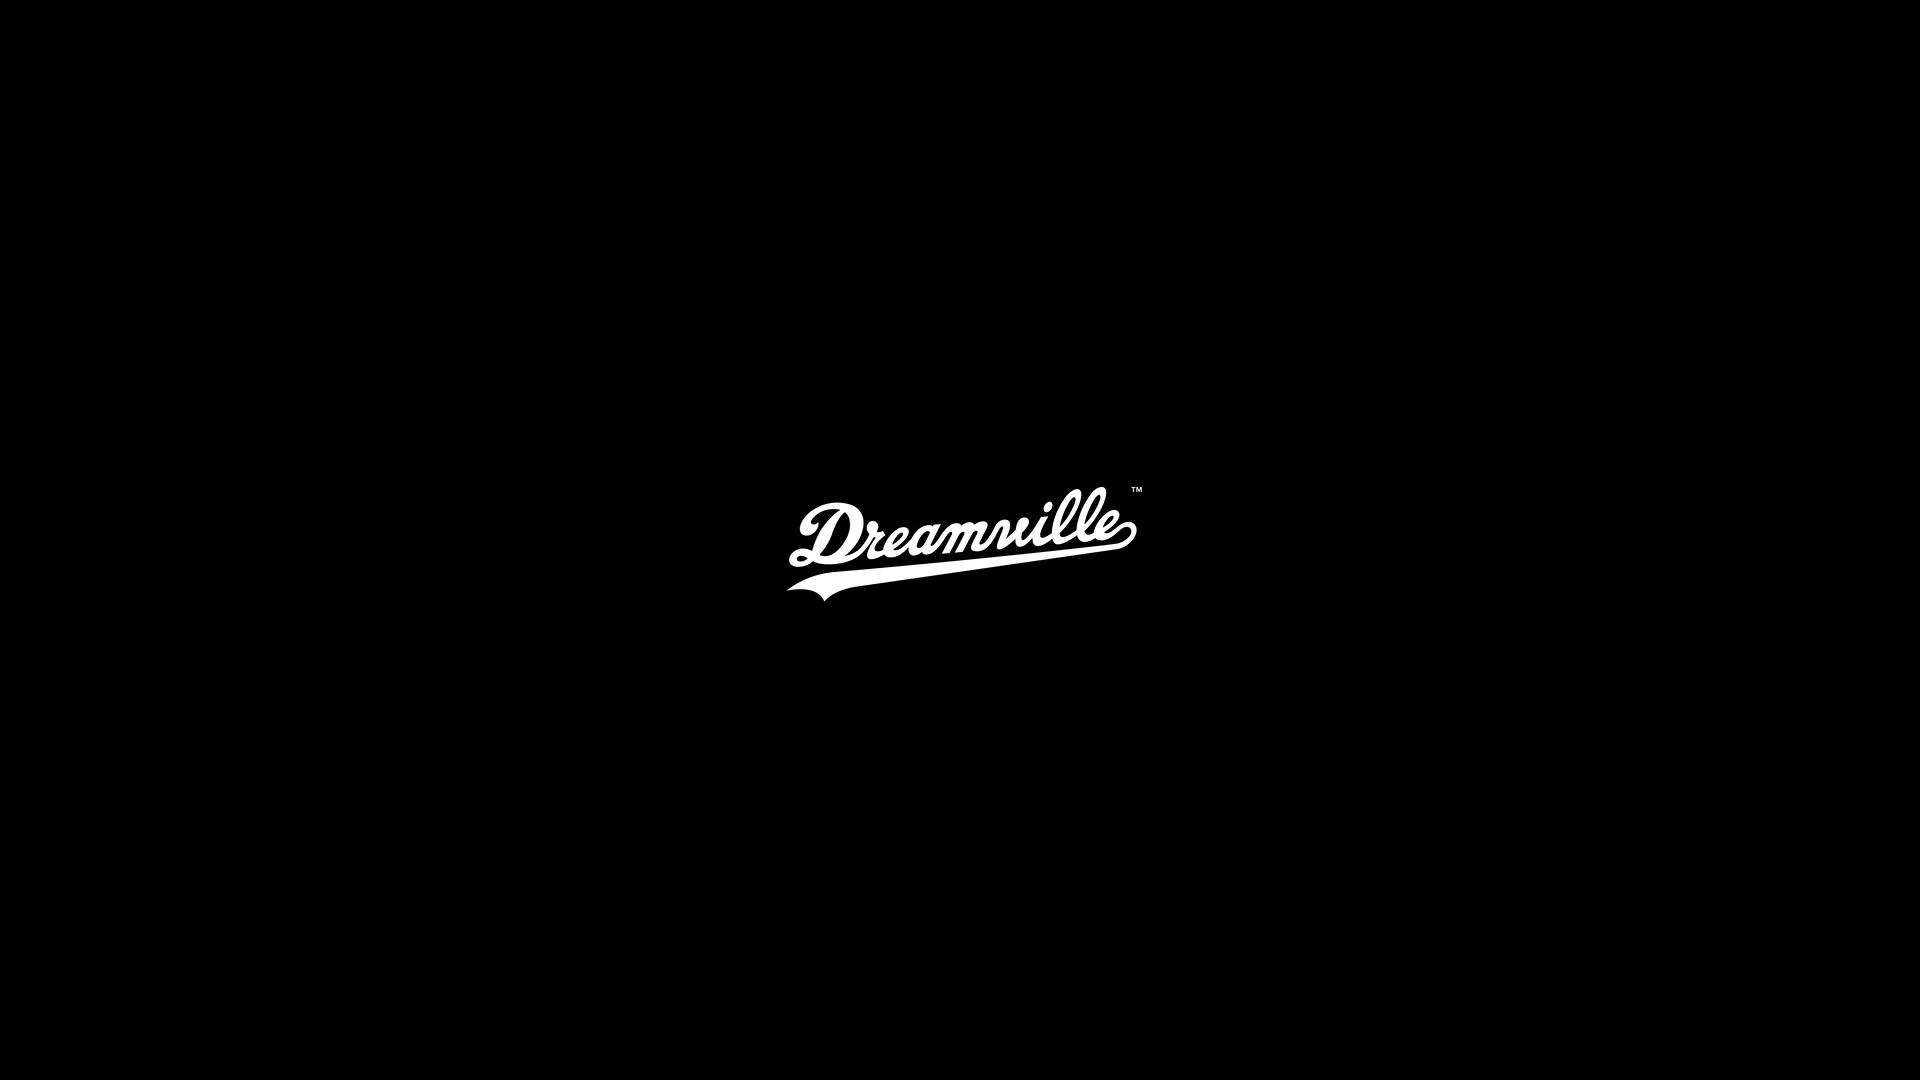 DreamVille Logo - Dreamville - Imgur